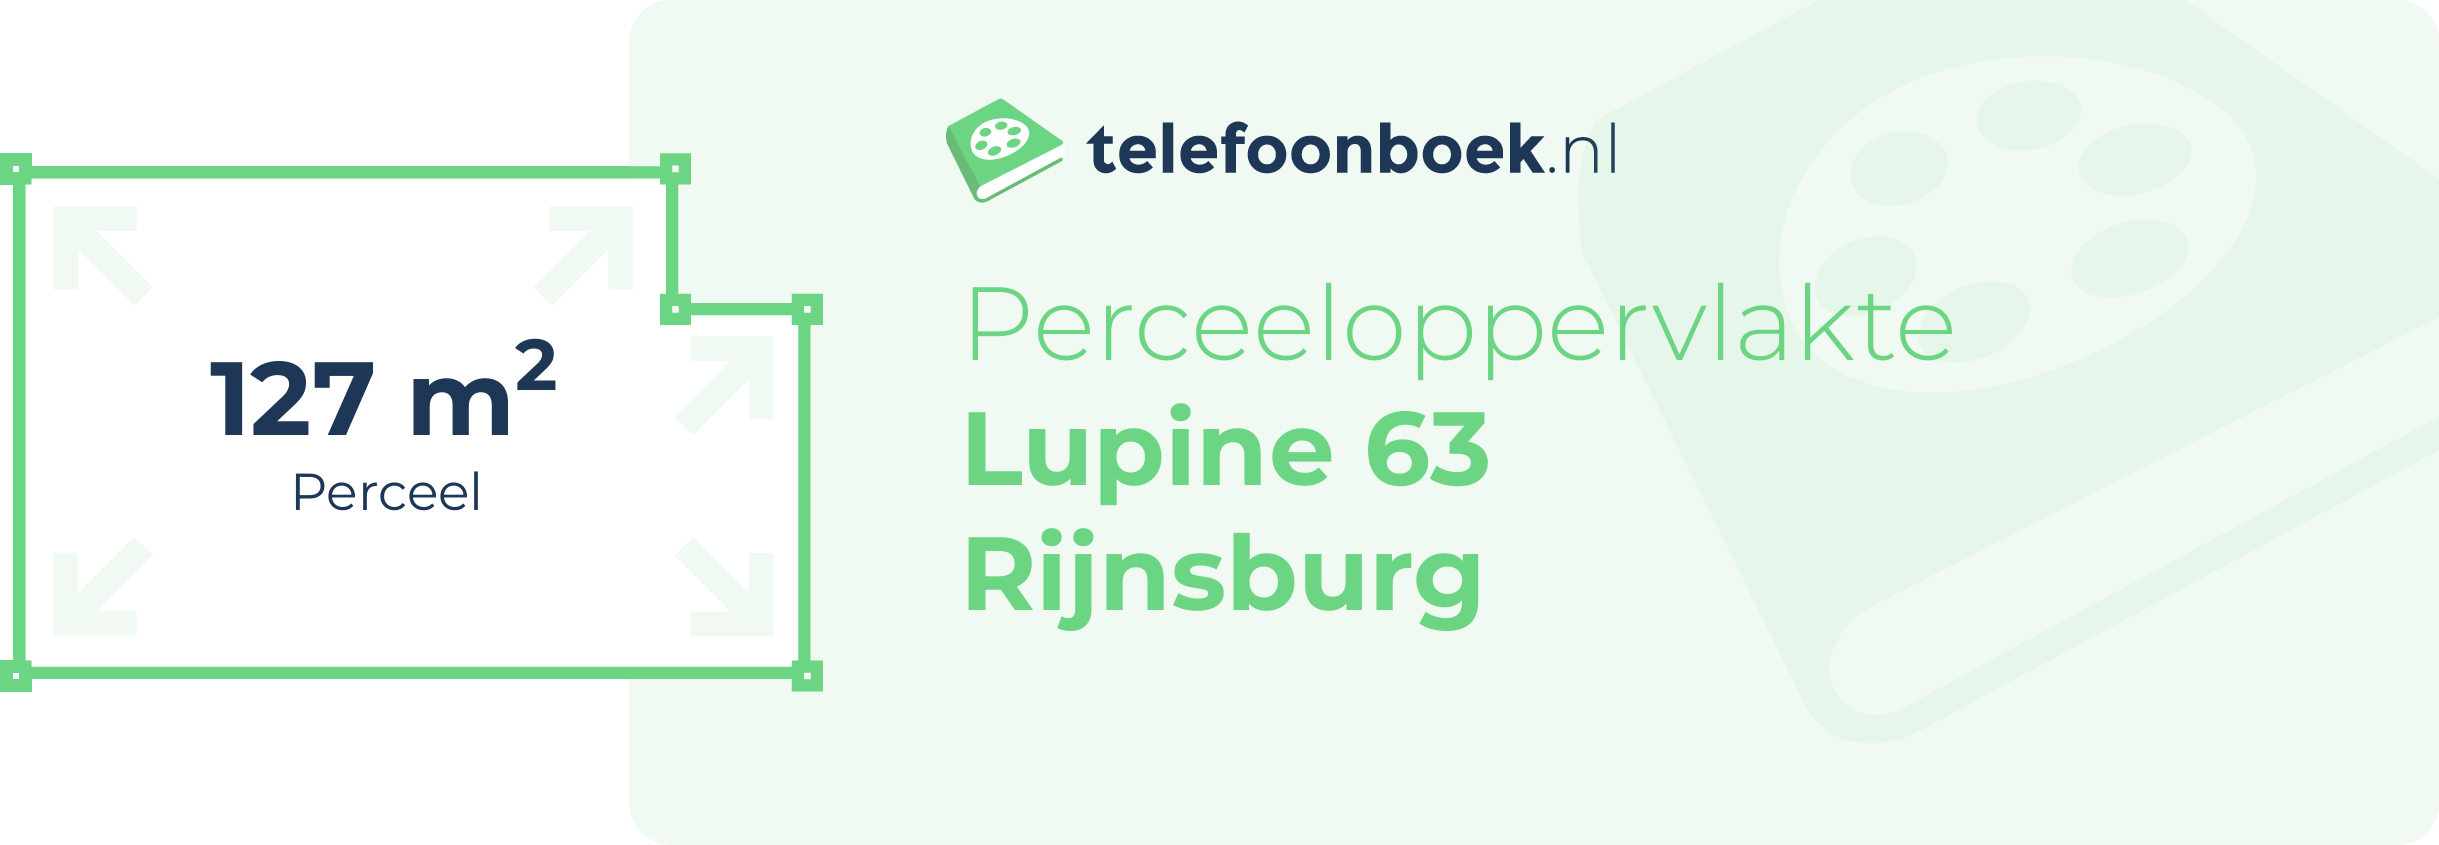 Perceeloppervlakte Lupine 63 Rijnsburg